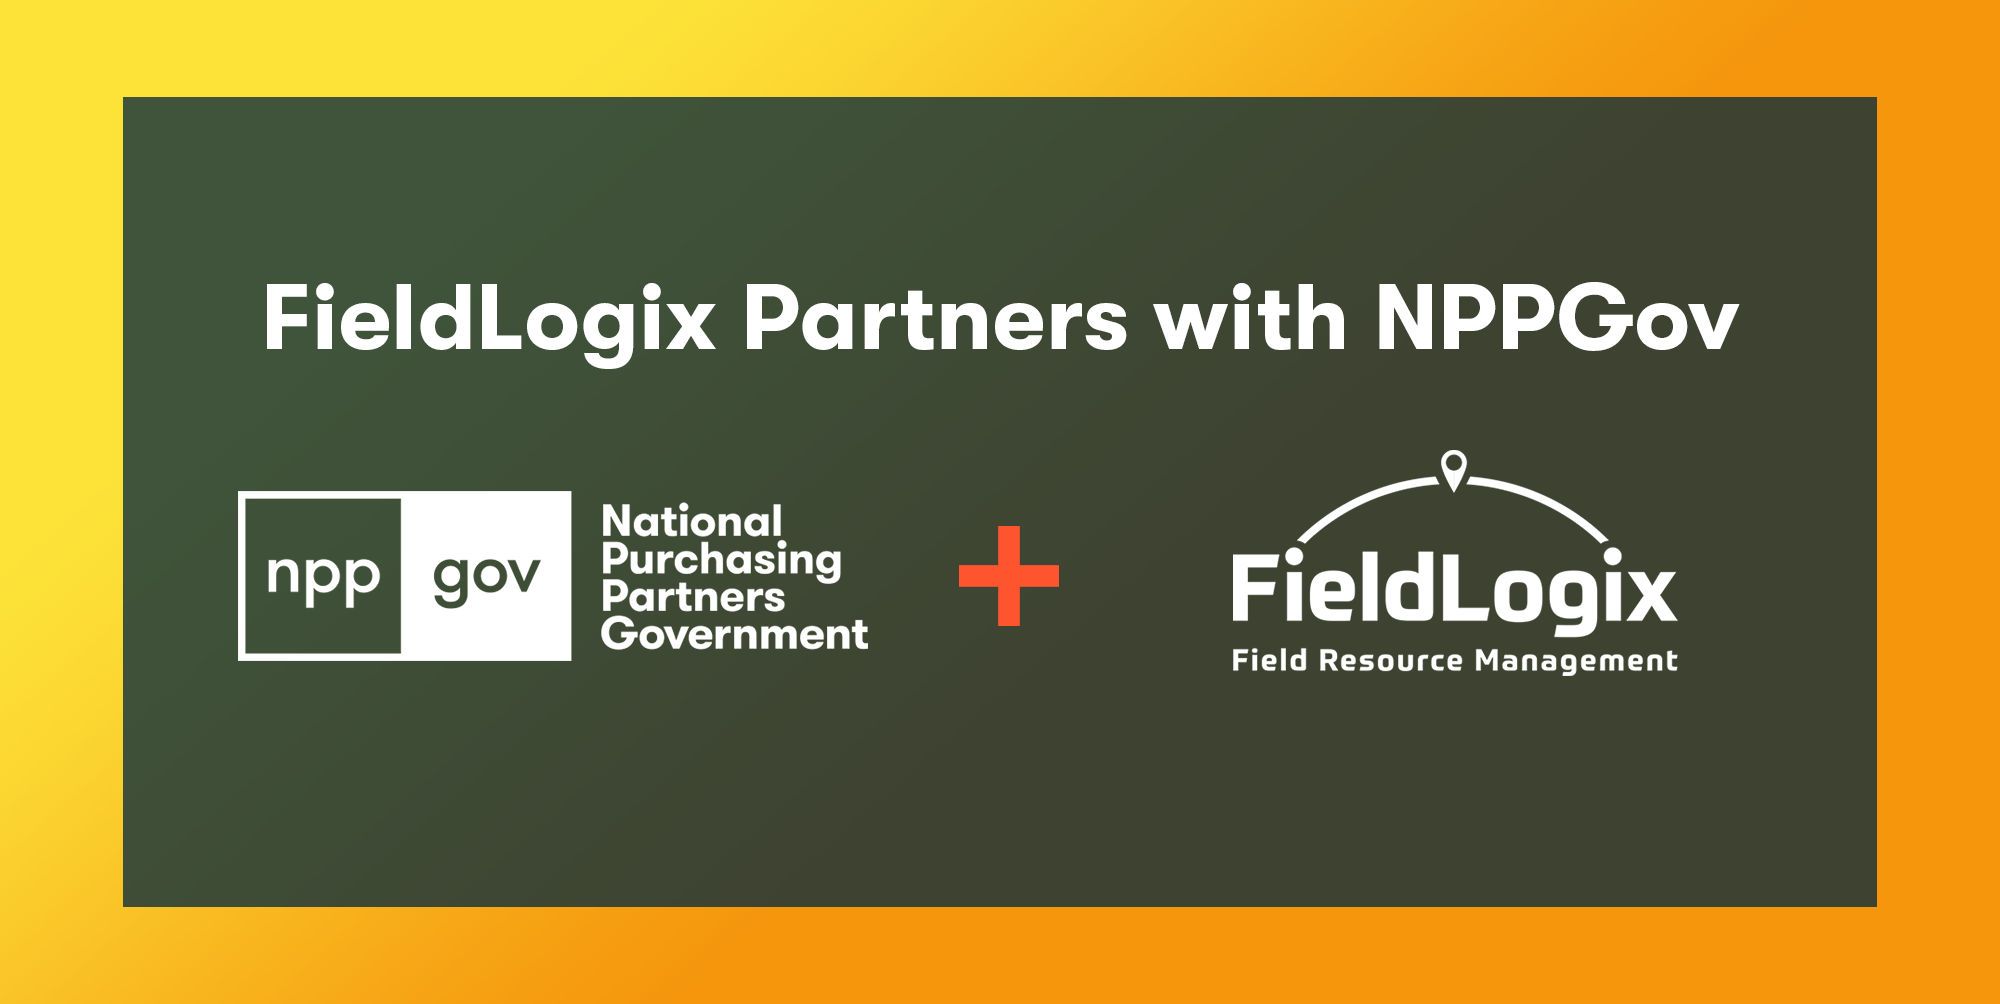 FieldLogix Partners with NPPGov